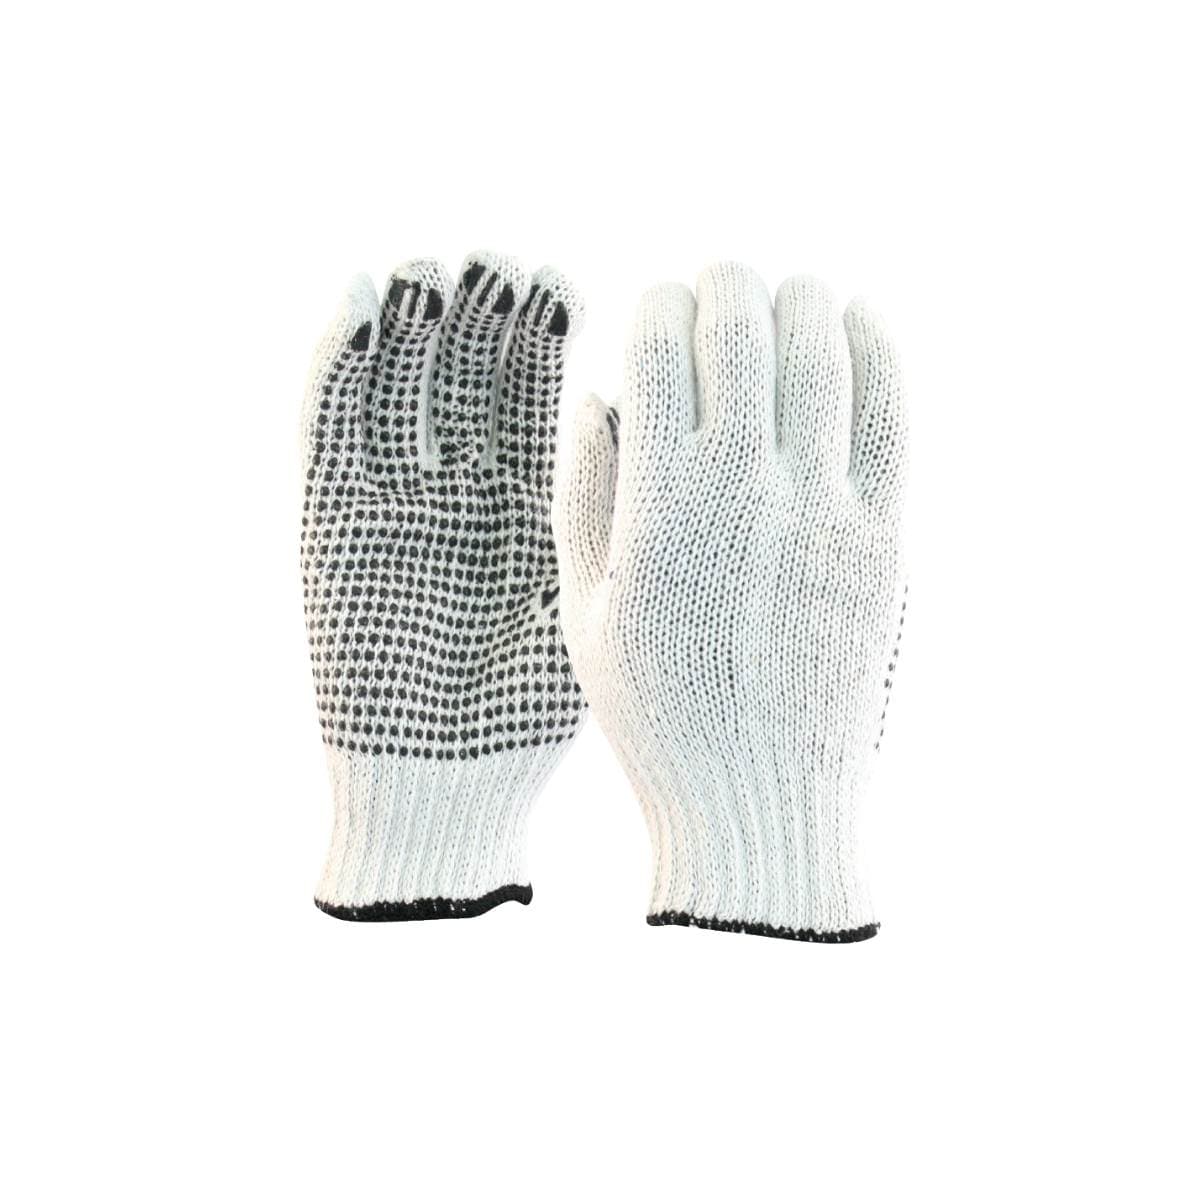 SafeRite® Men's Polka Dot Glove SR476PD (Pack of 12)